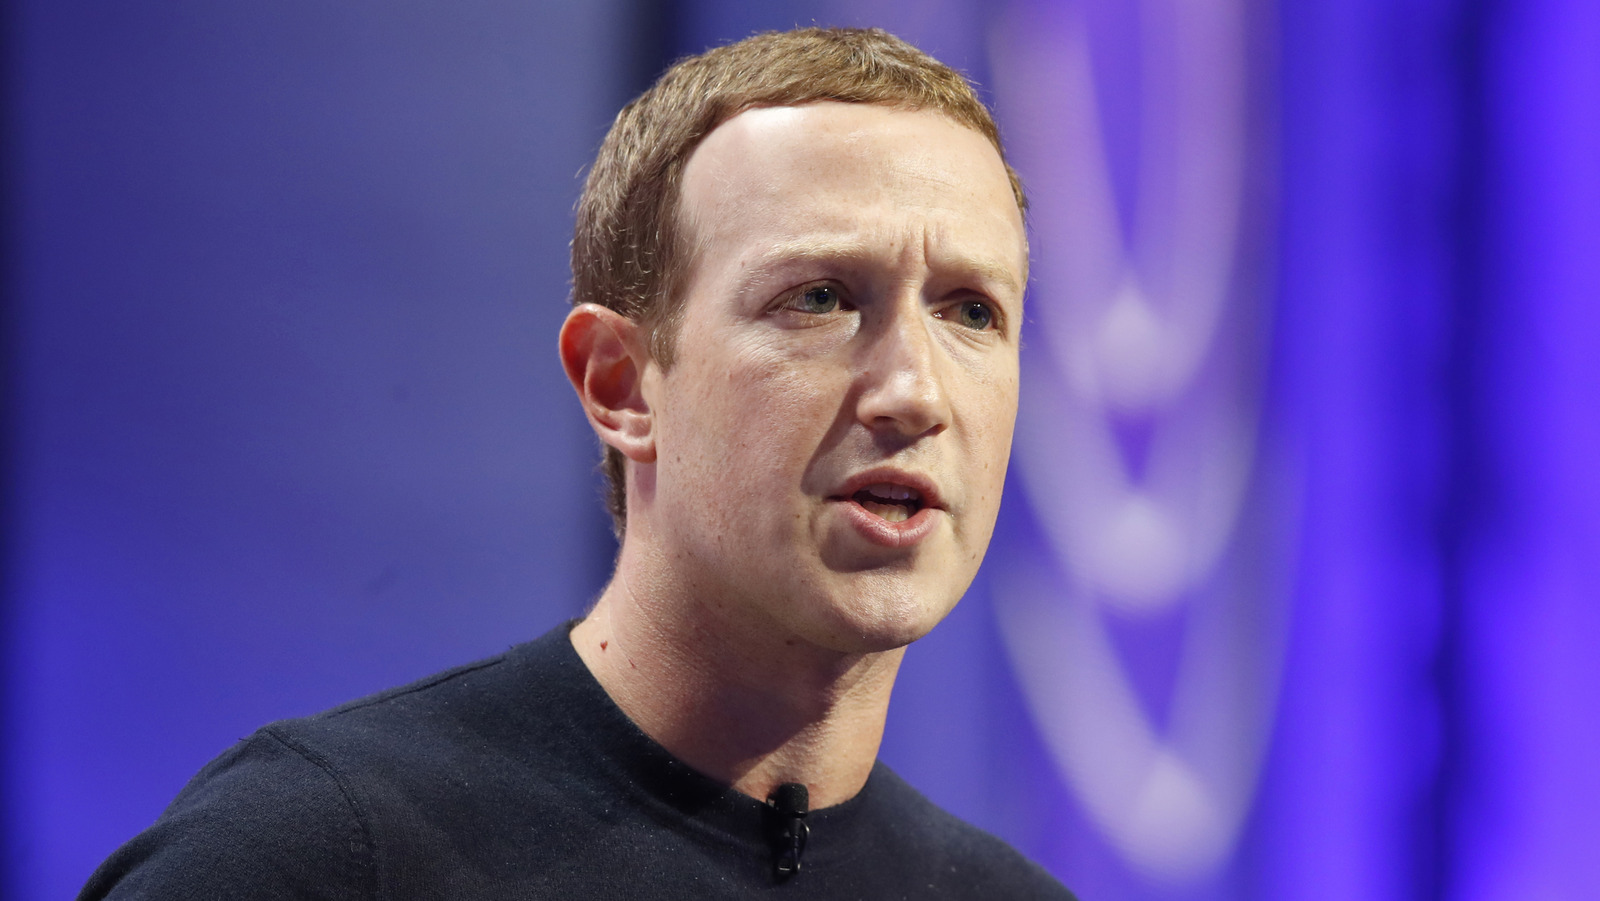 Mark Zuckerberg Has Had Quite The Transformation - Celeb Jam